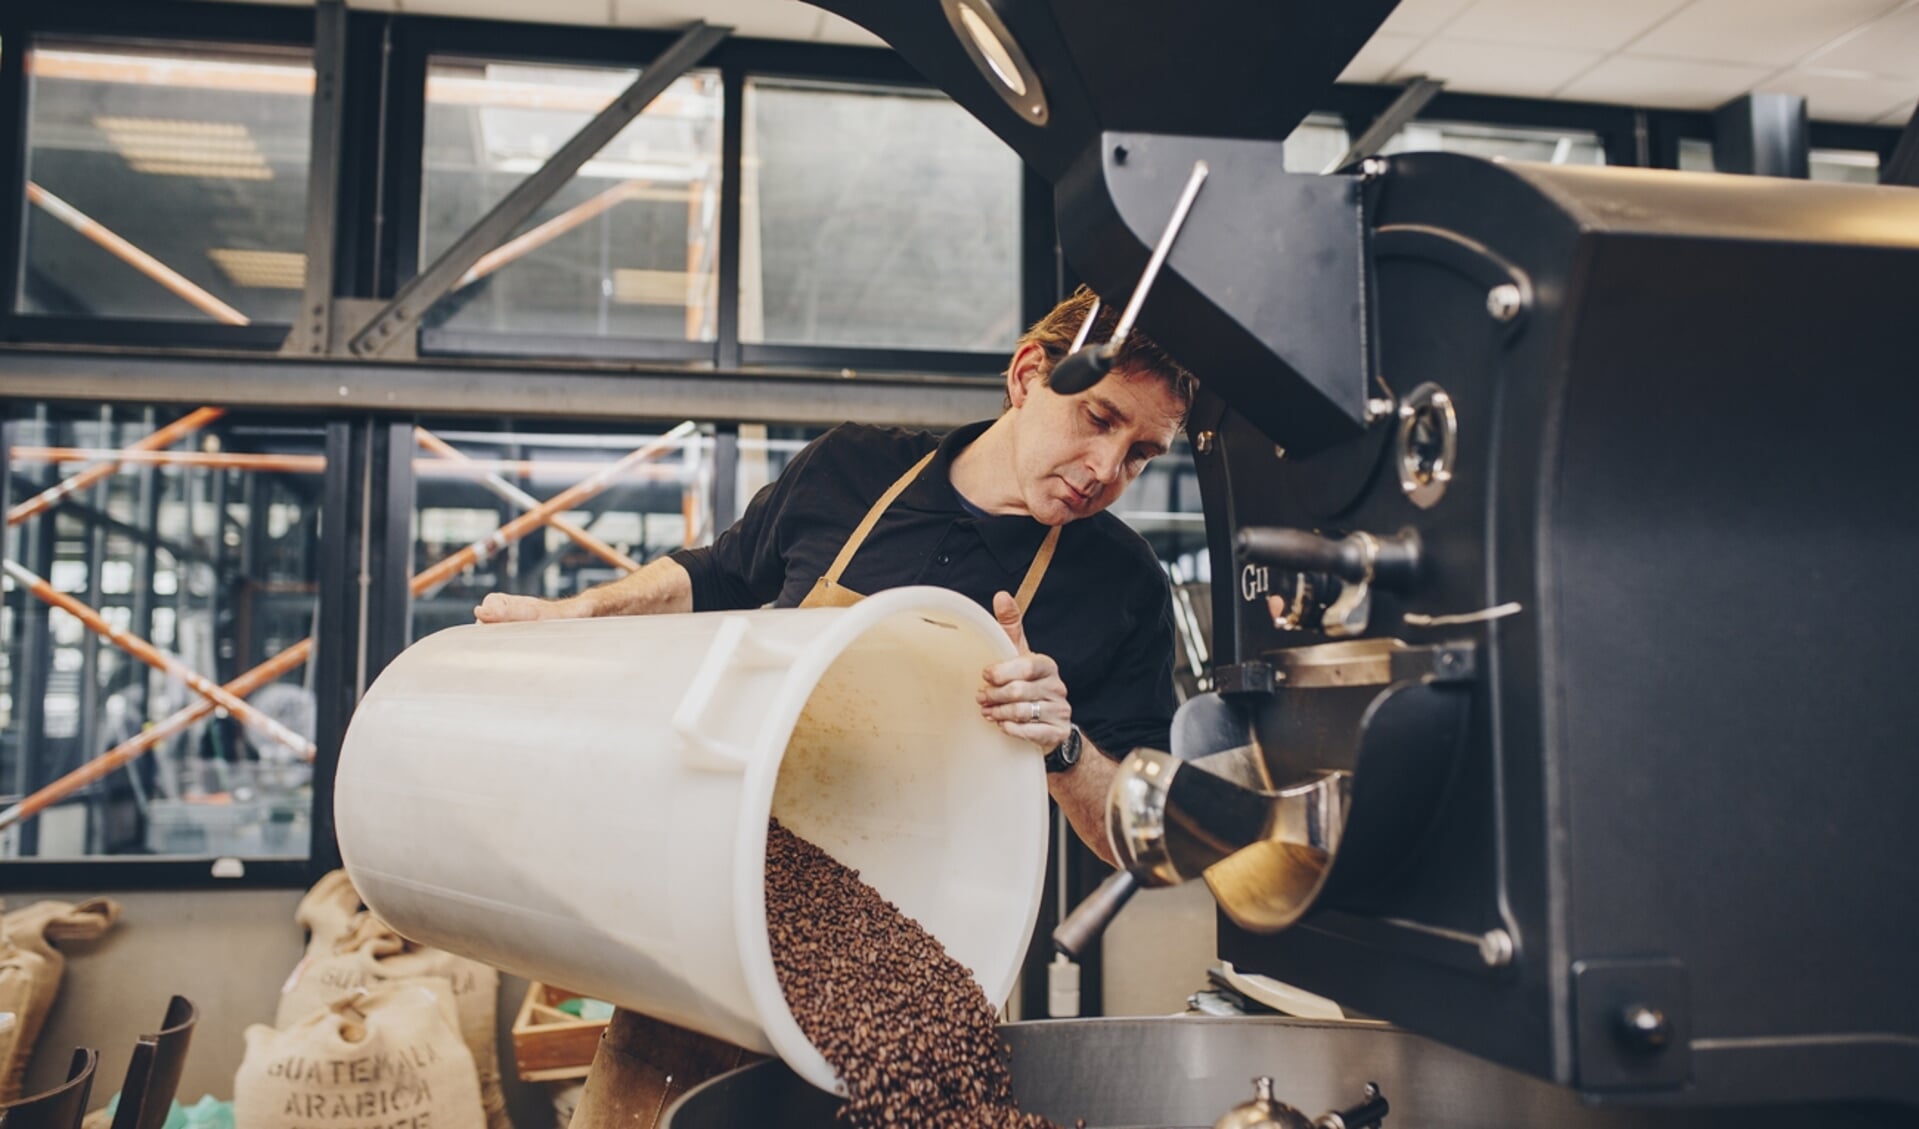 Marc van Berkel van Noord Coffee Roasters is blij met de samenwerking. 